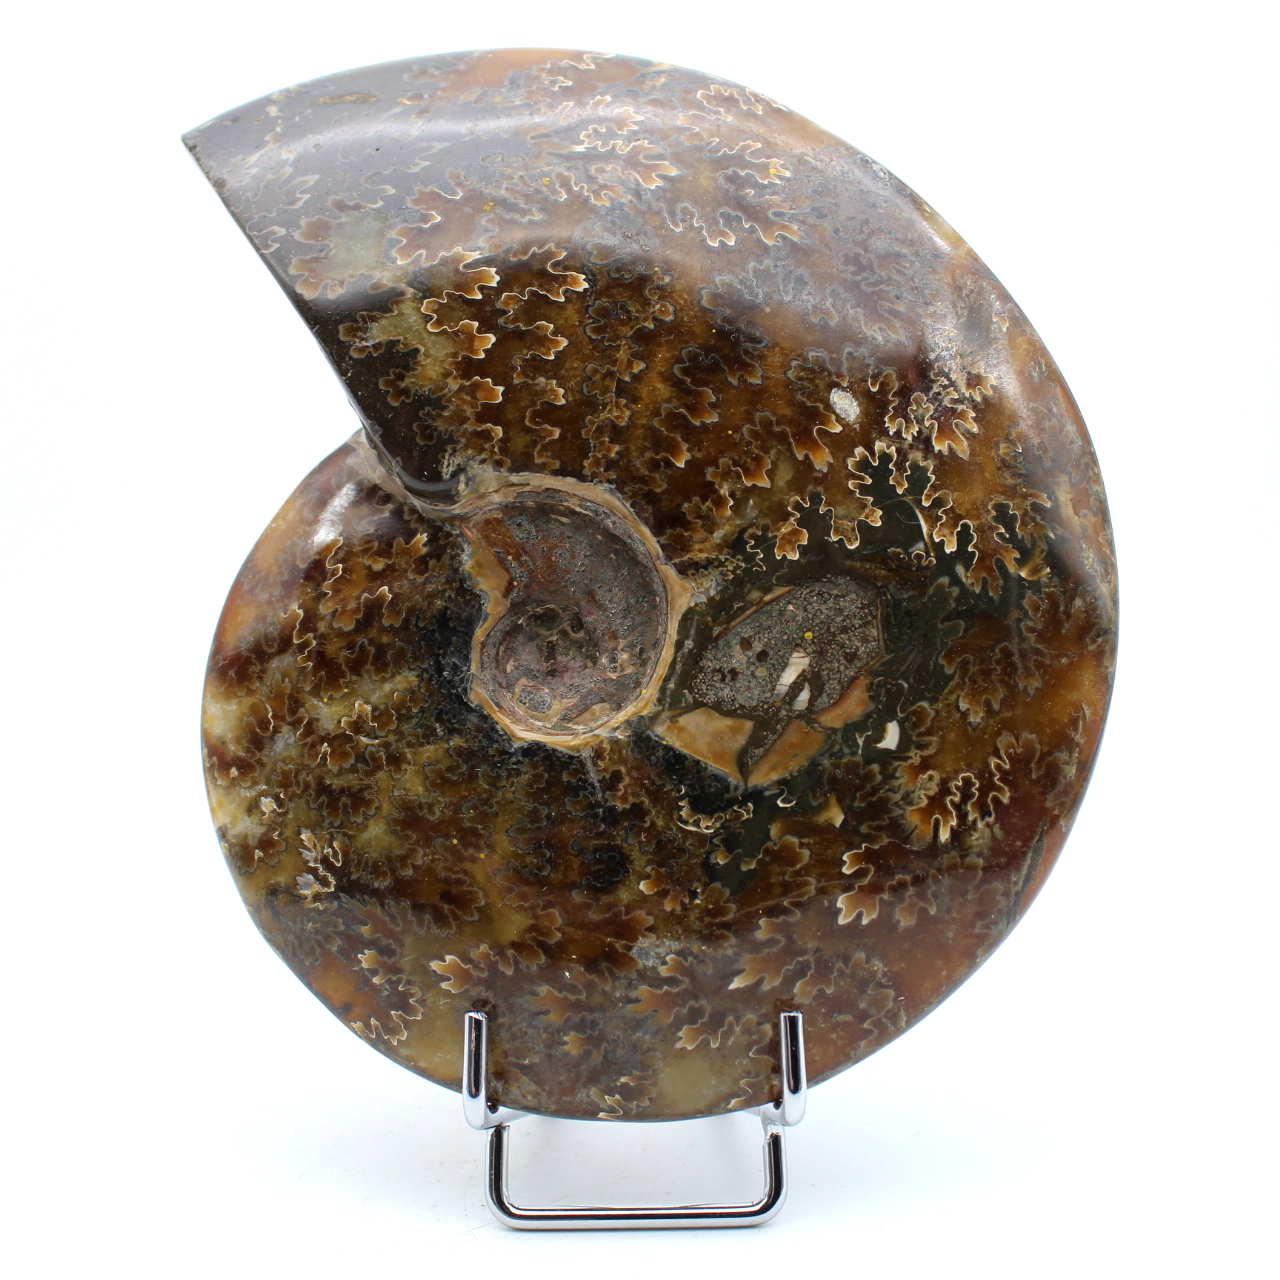 Ammonite naturale intera lucidata